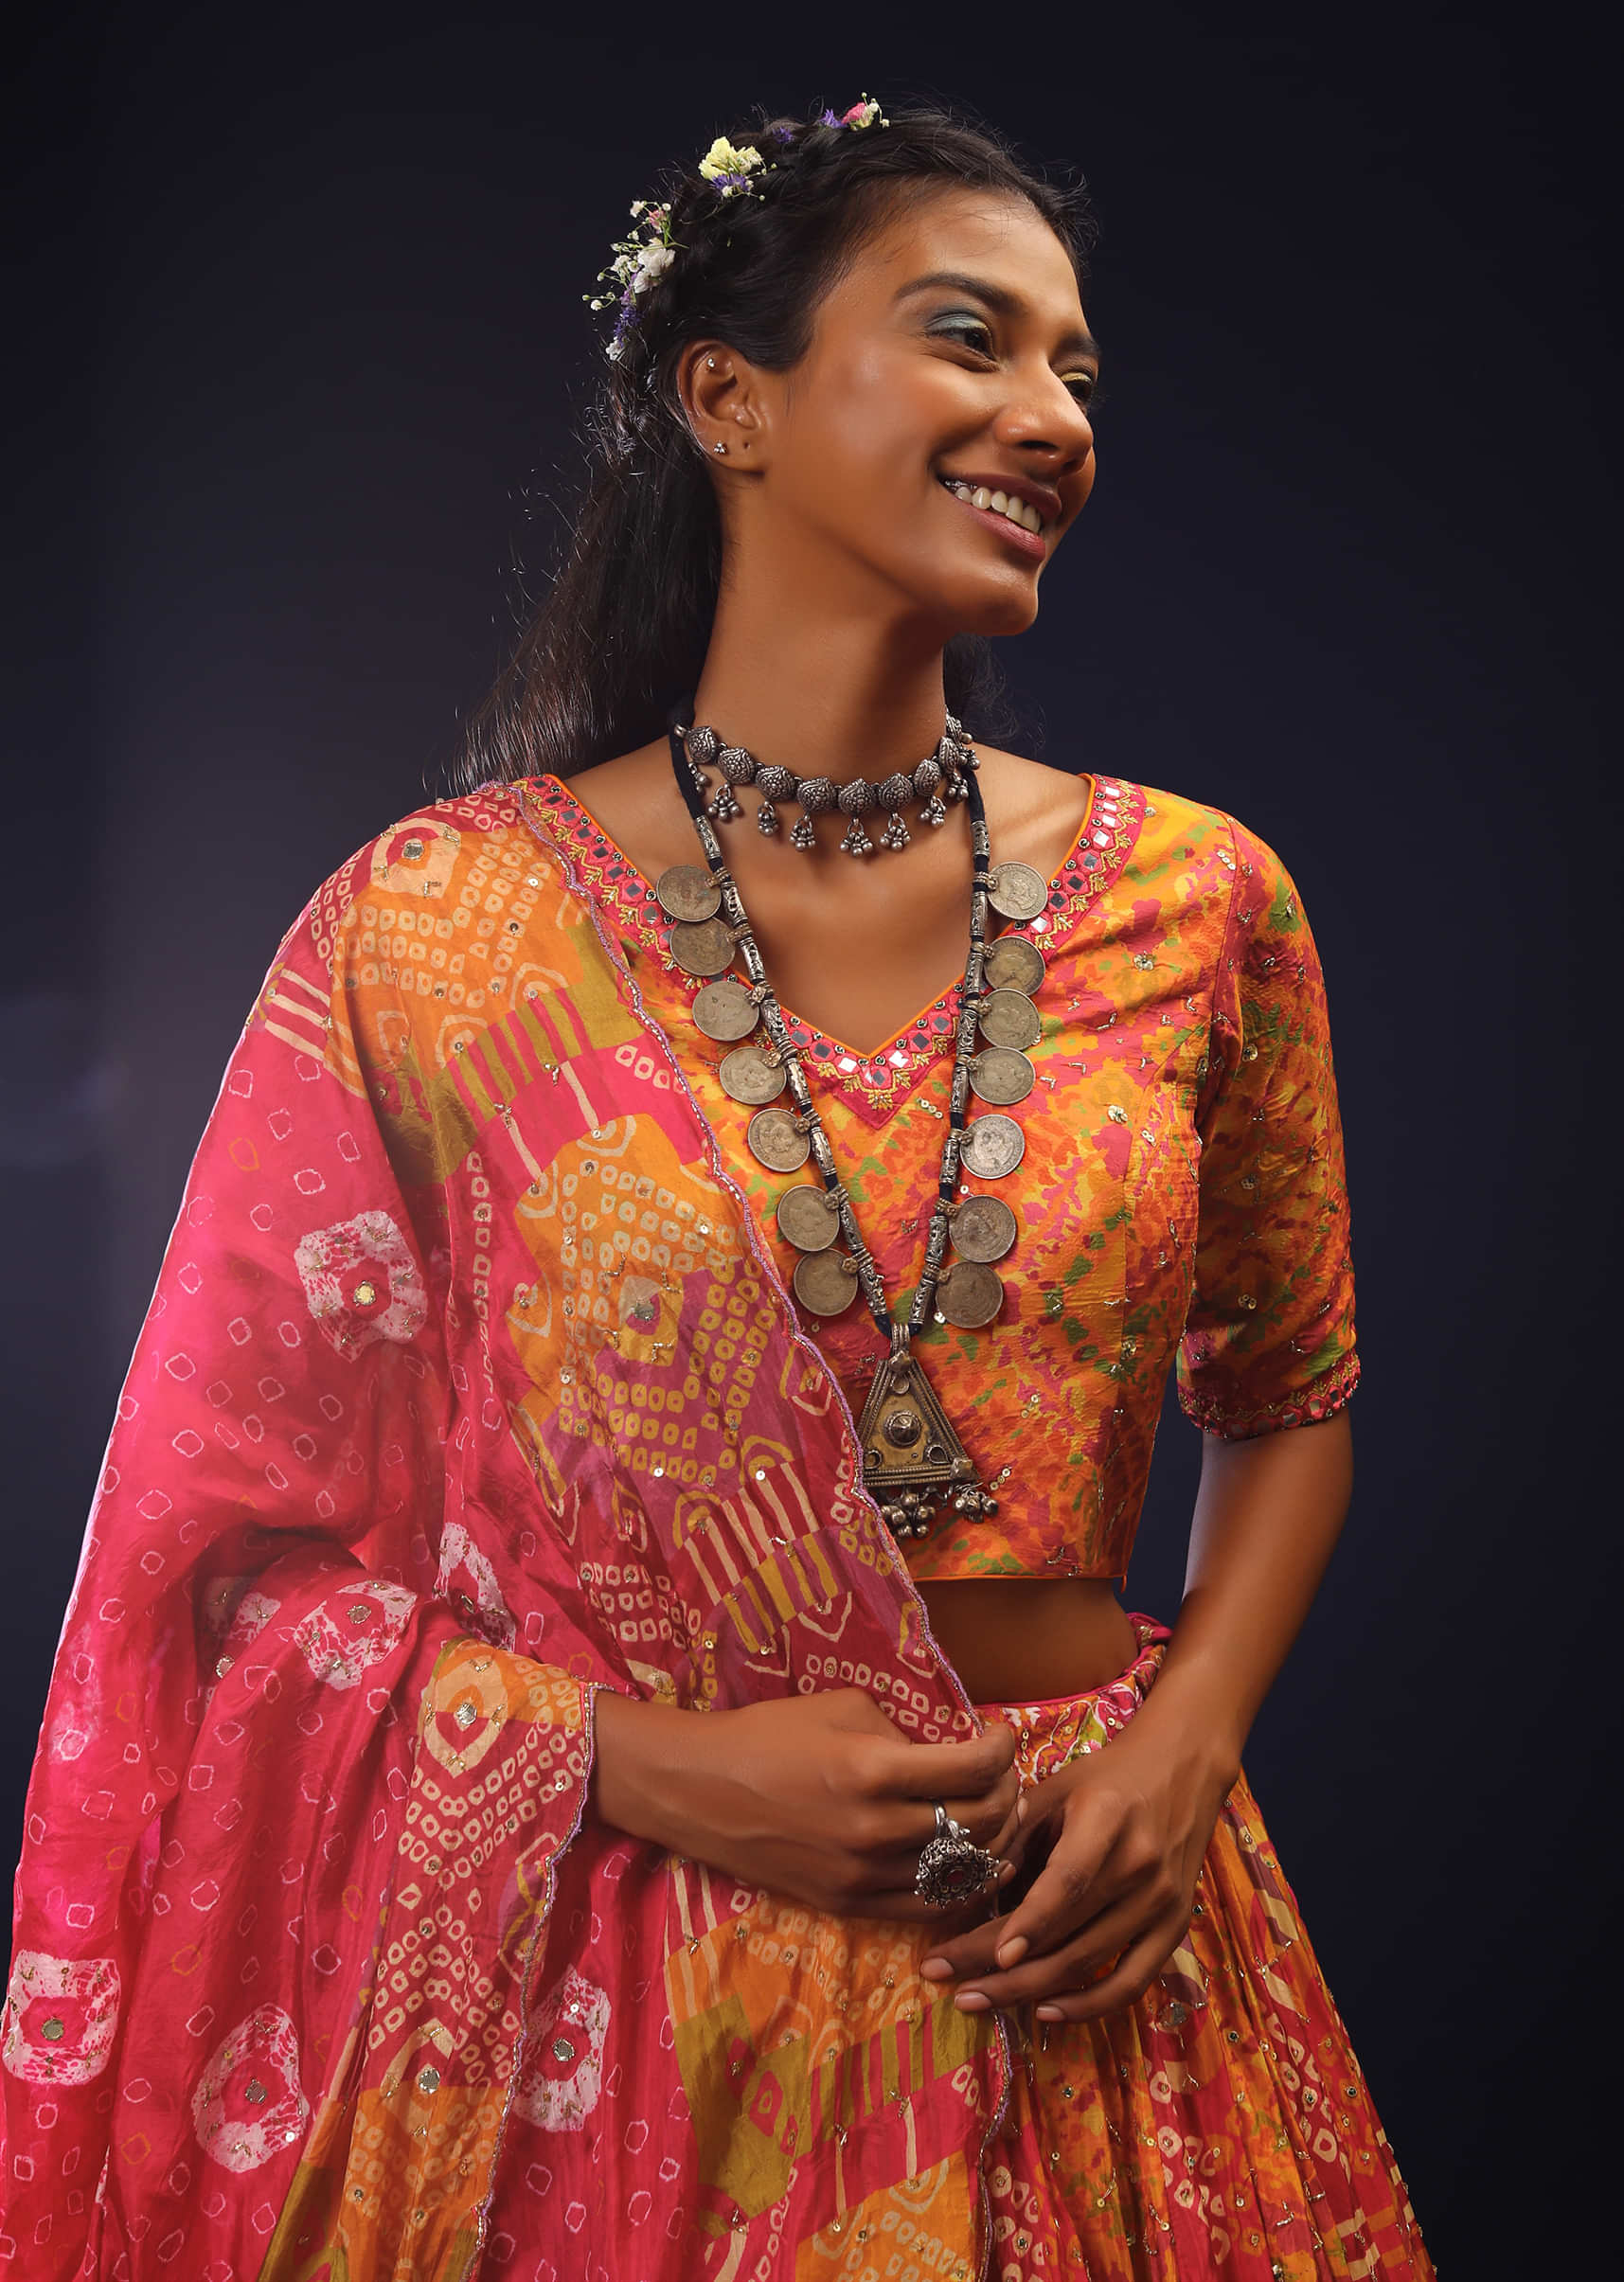 Multi Colored Panelled Lehenga Choli With Jaipuri Tie Dye And Floral Print